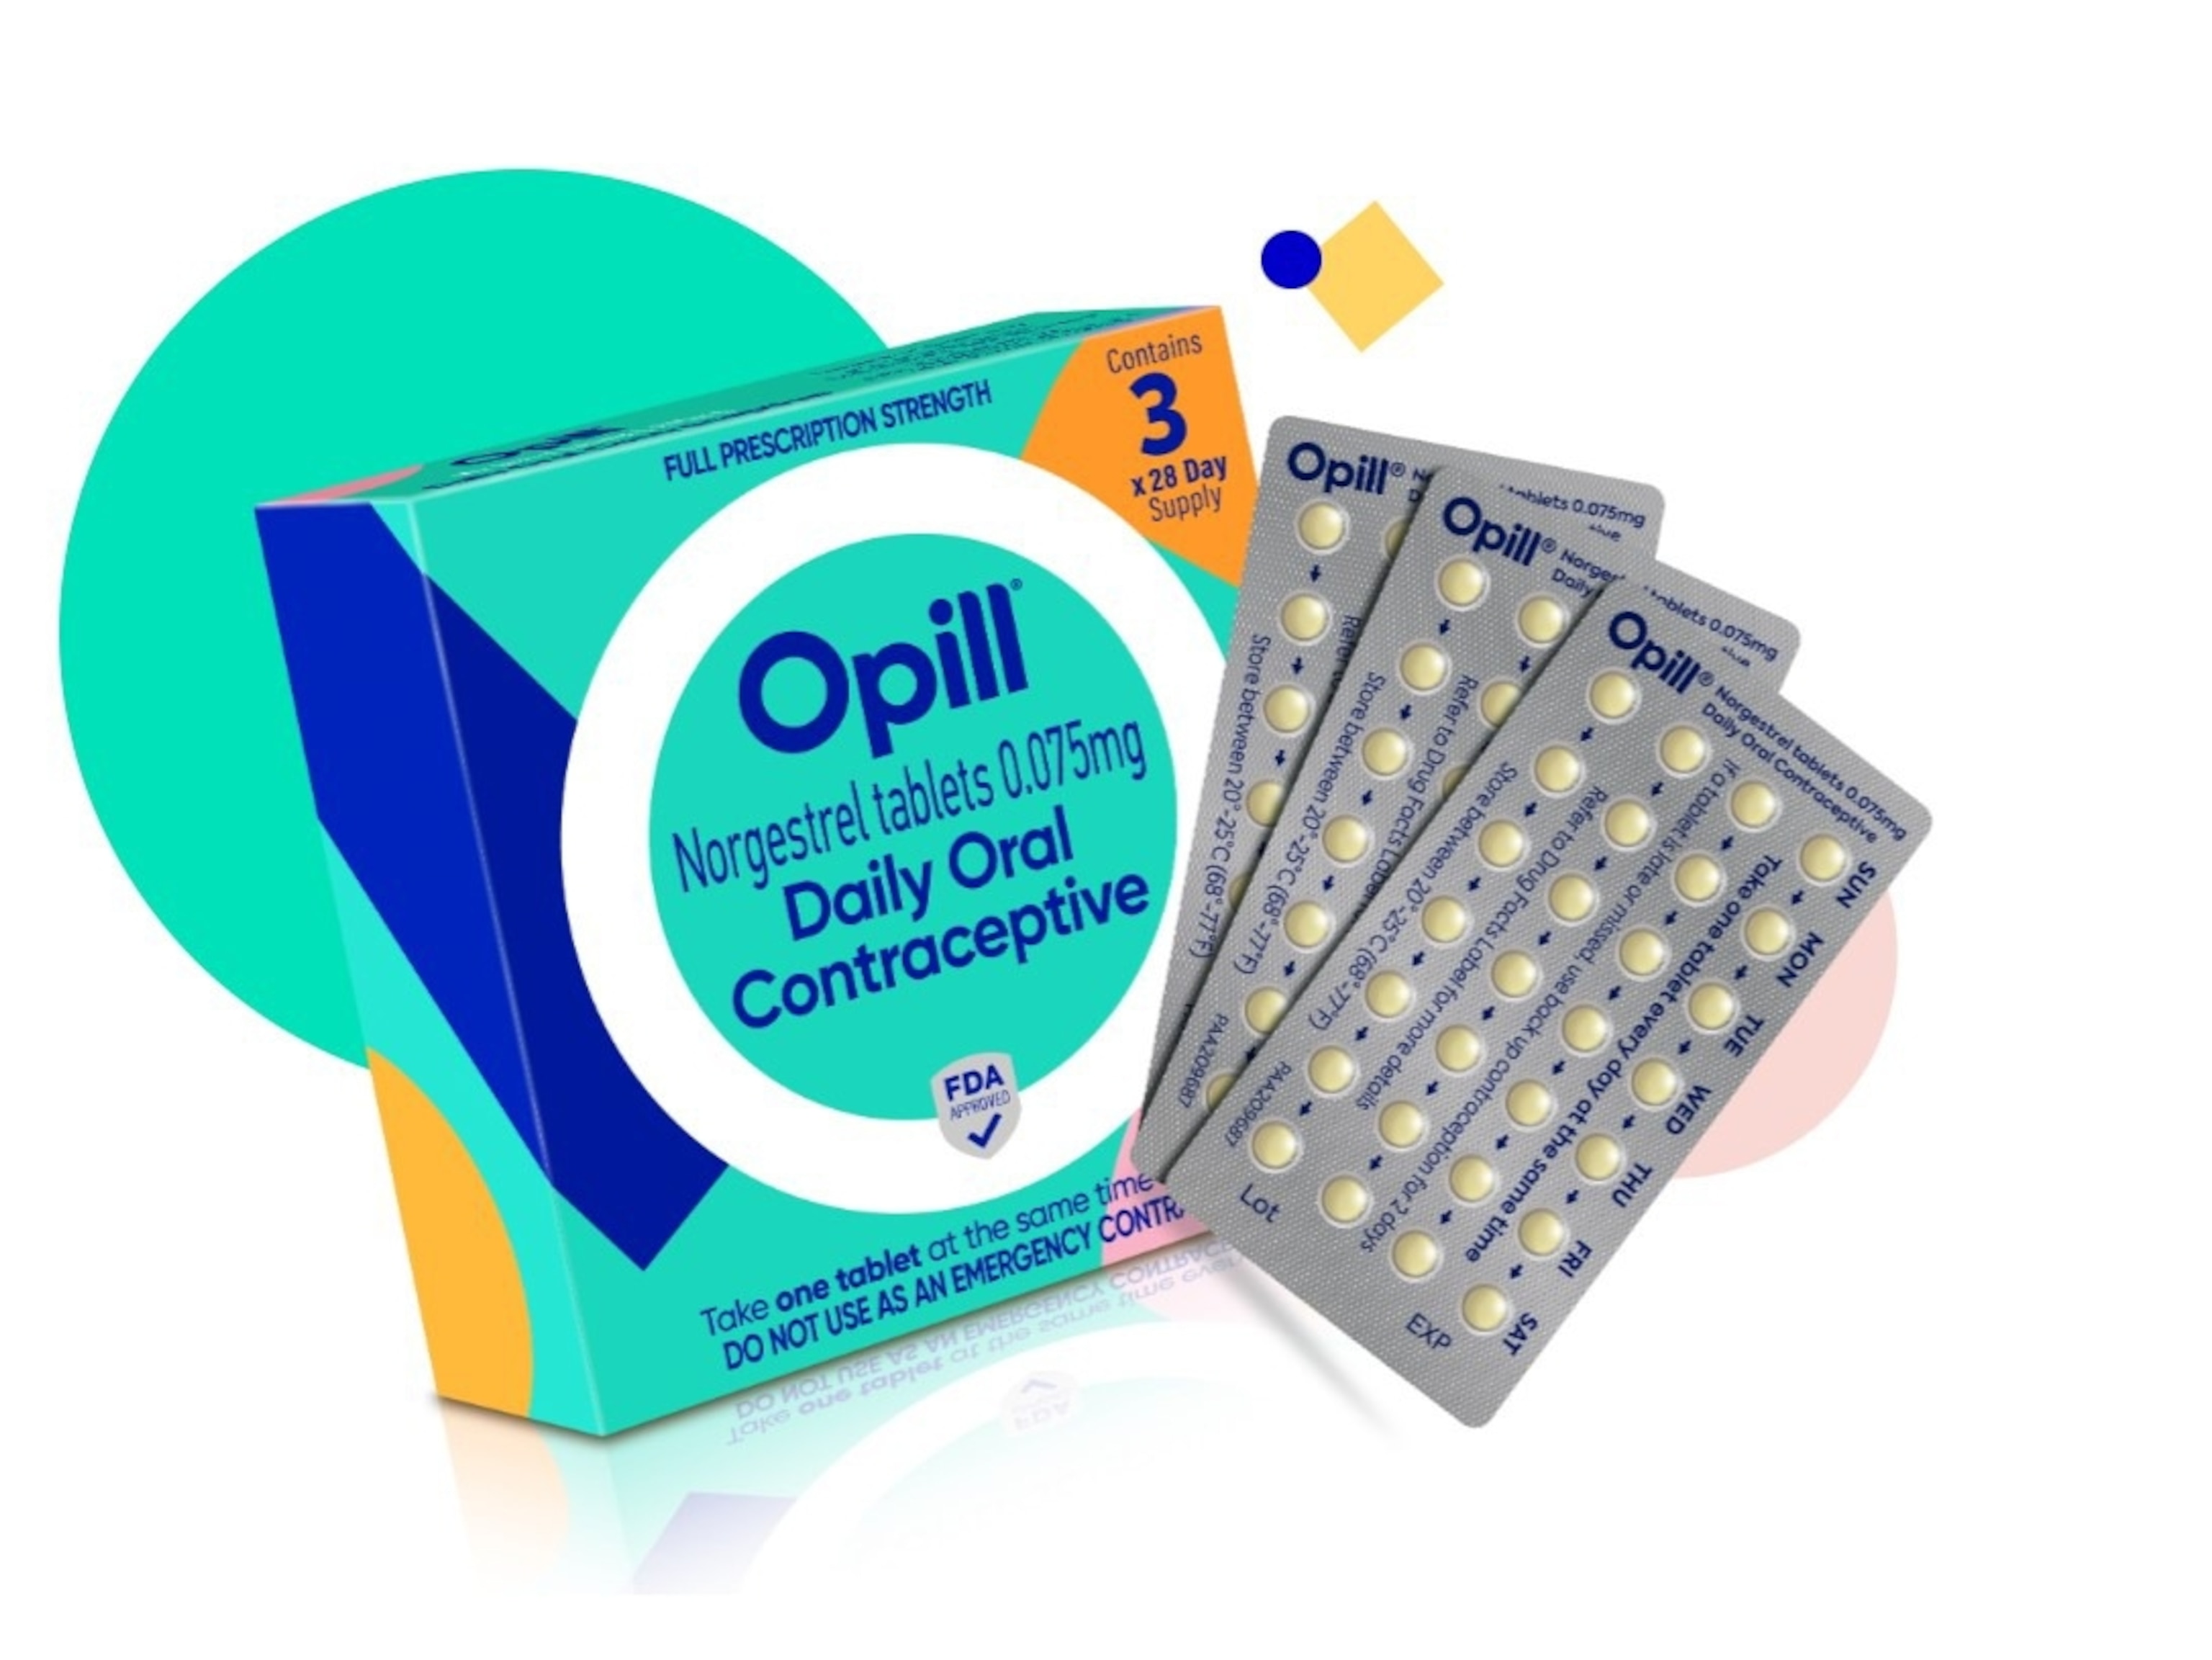 PHOTO: Opill a daily oral contraceptive.